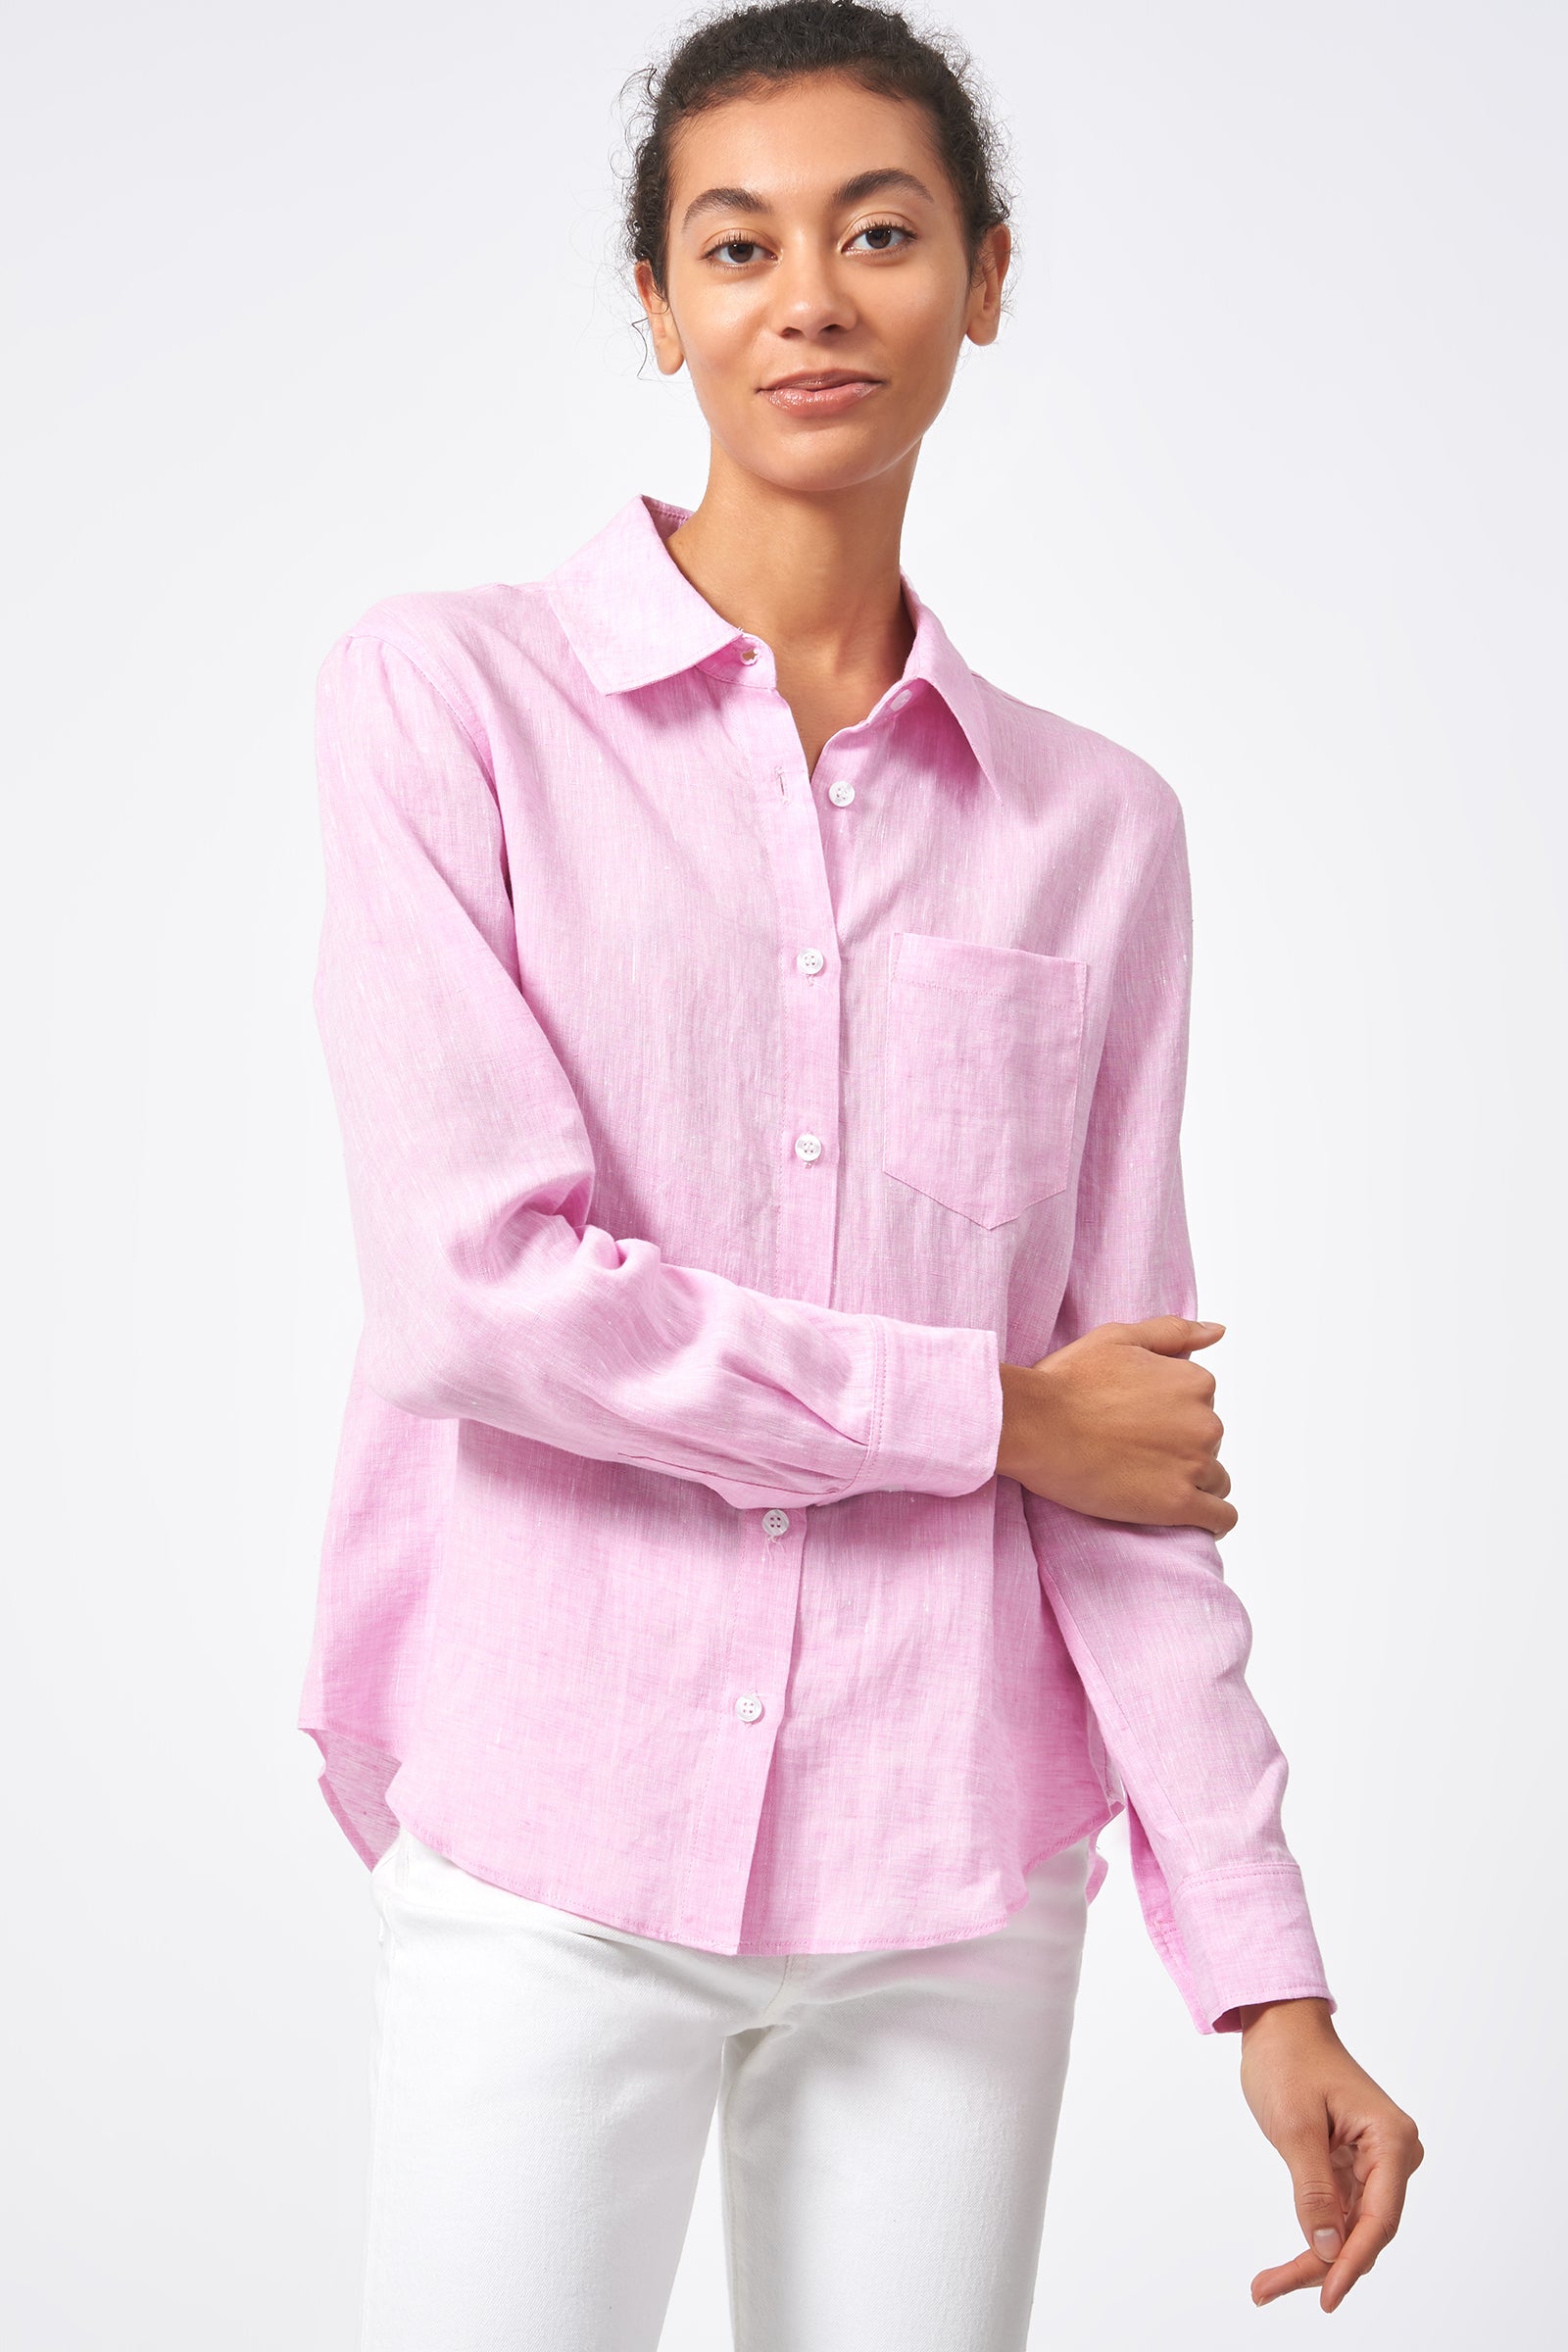 Kal Rieman Classic Tailored Shirt European Linen Pink On Model Front View